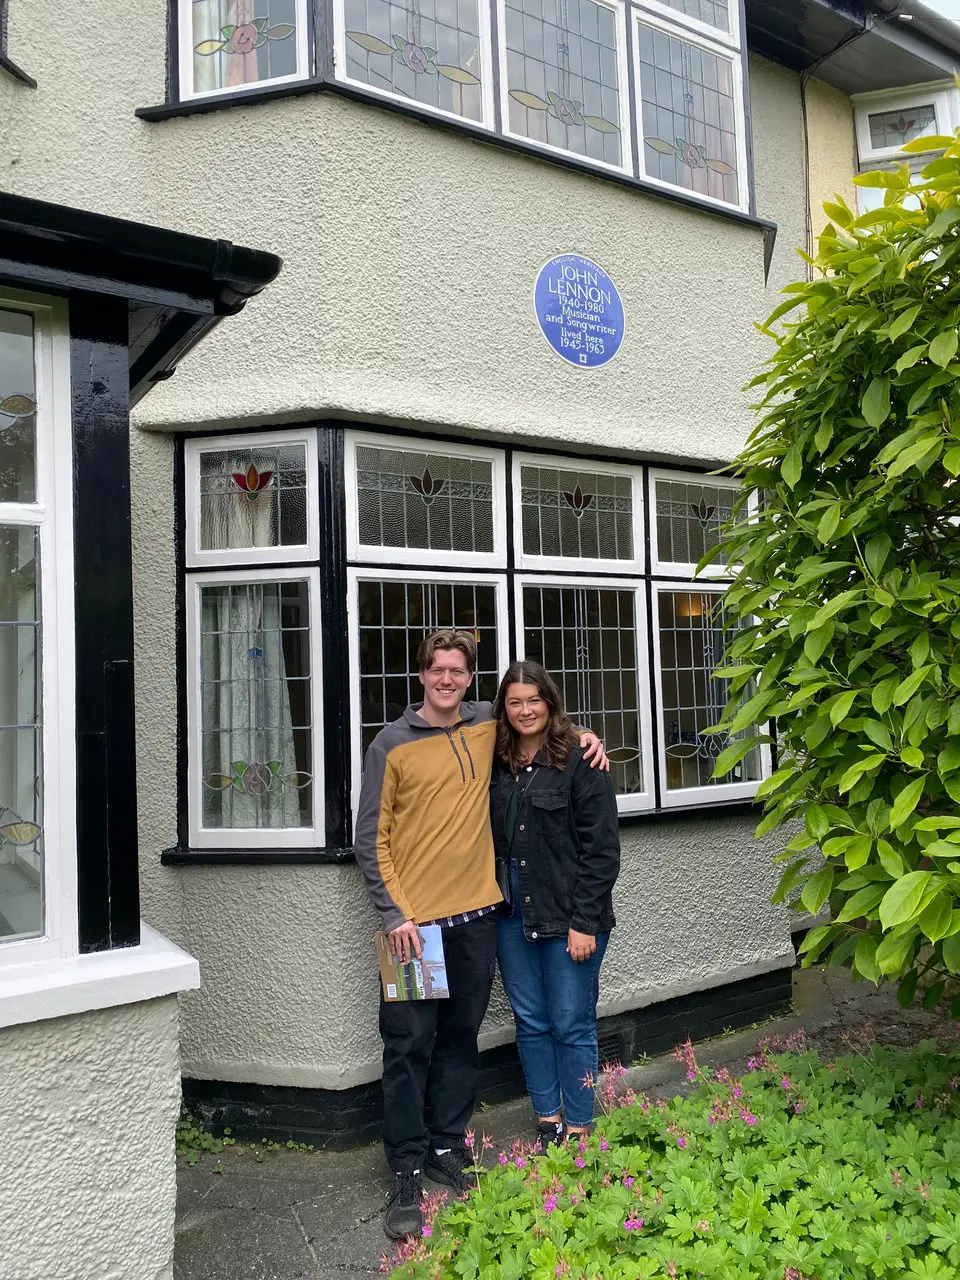 Ella and Rob visiting John Lennon's house